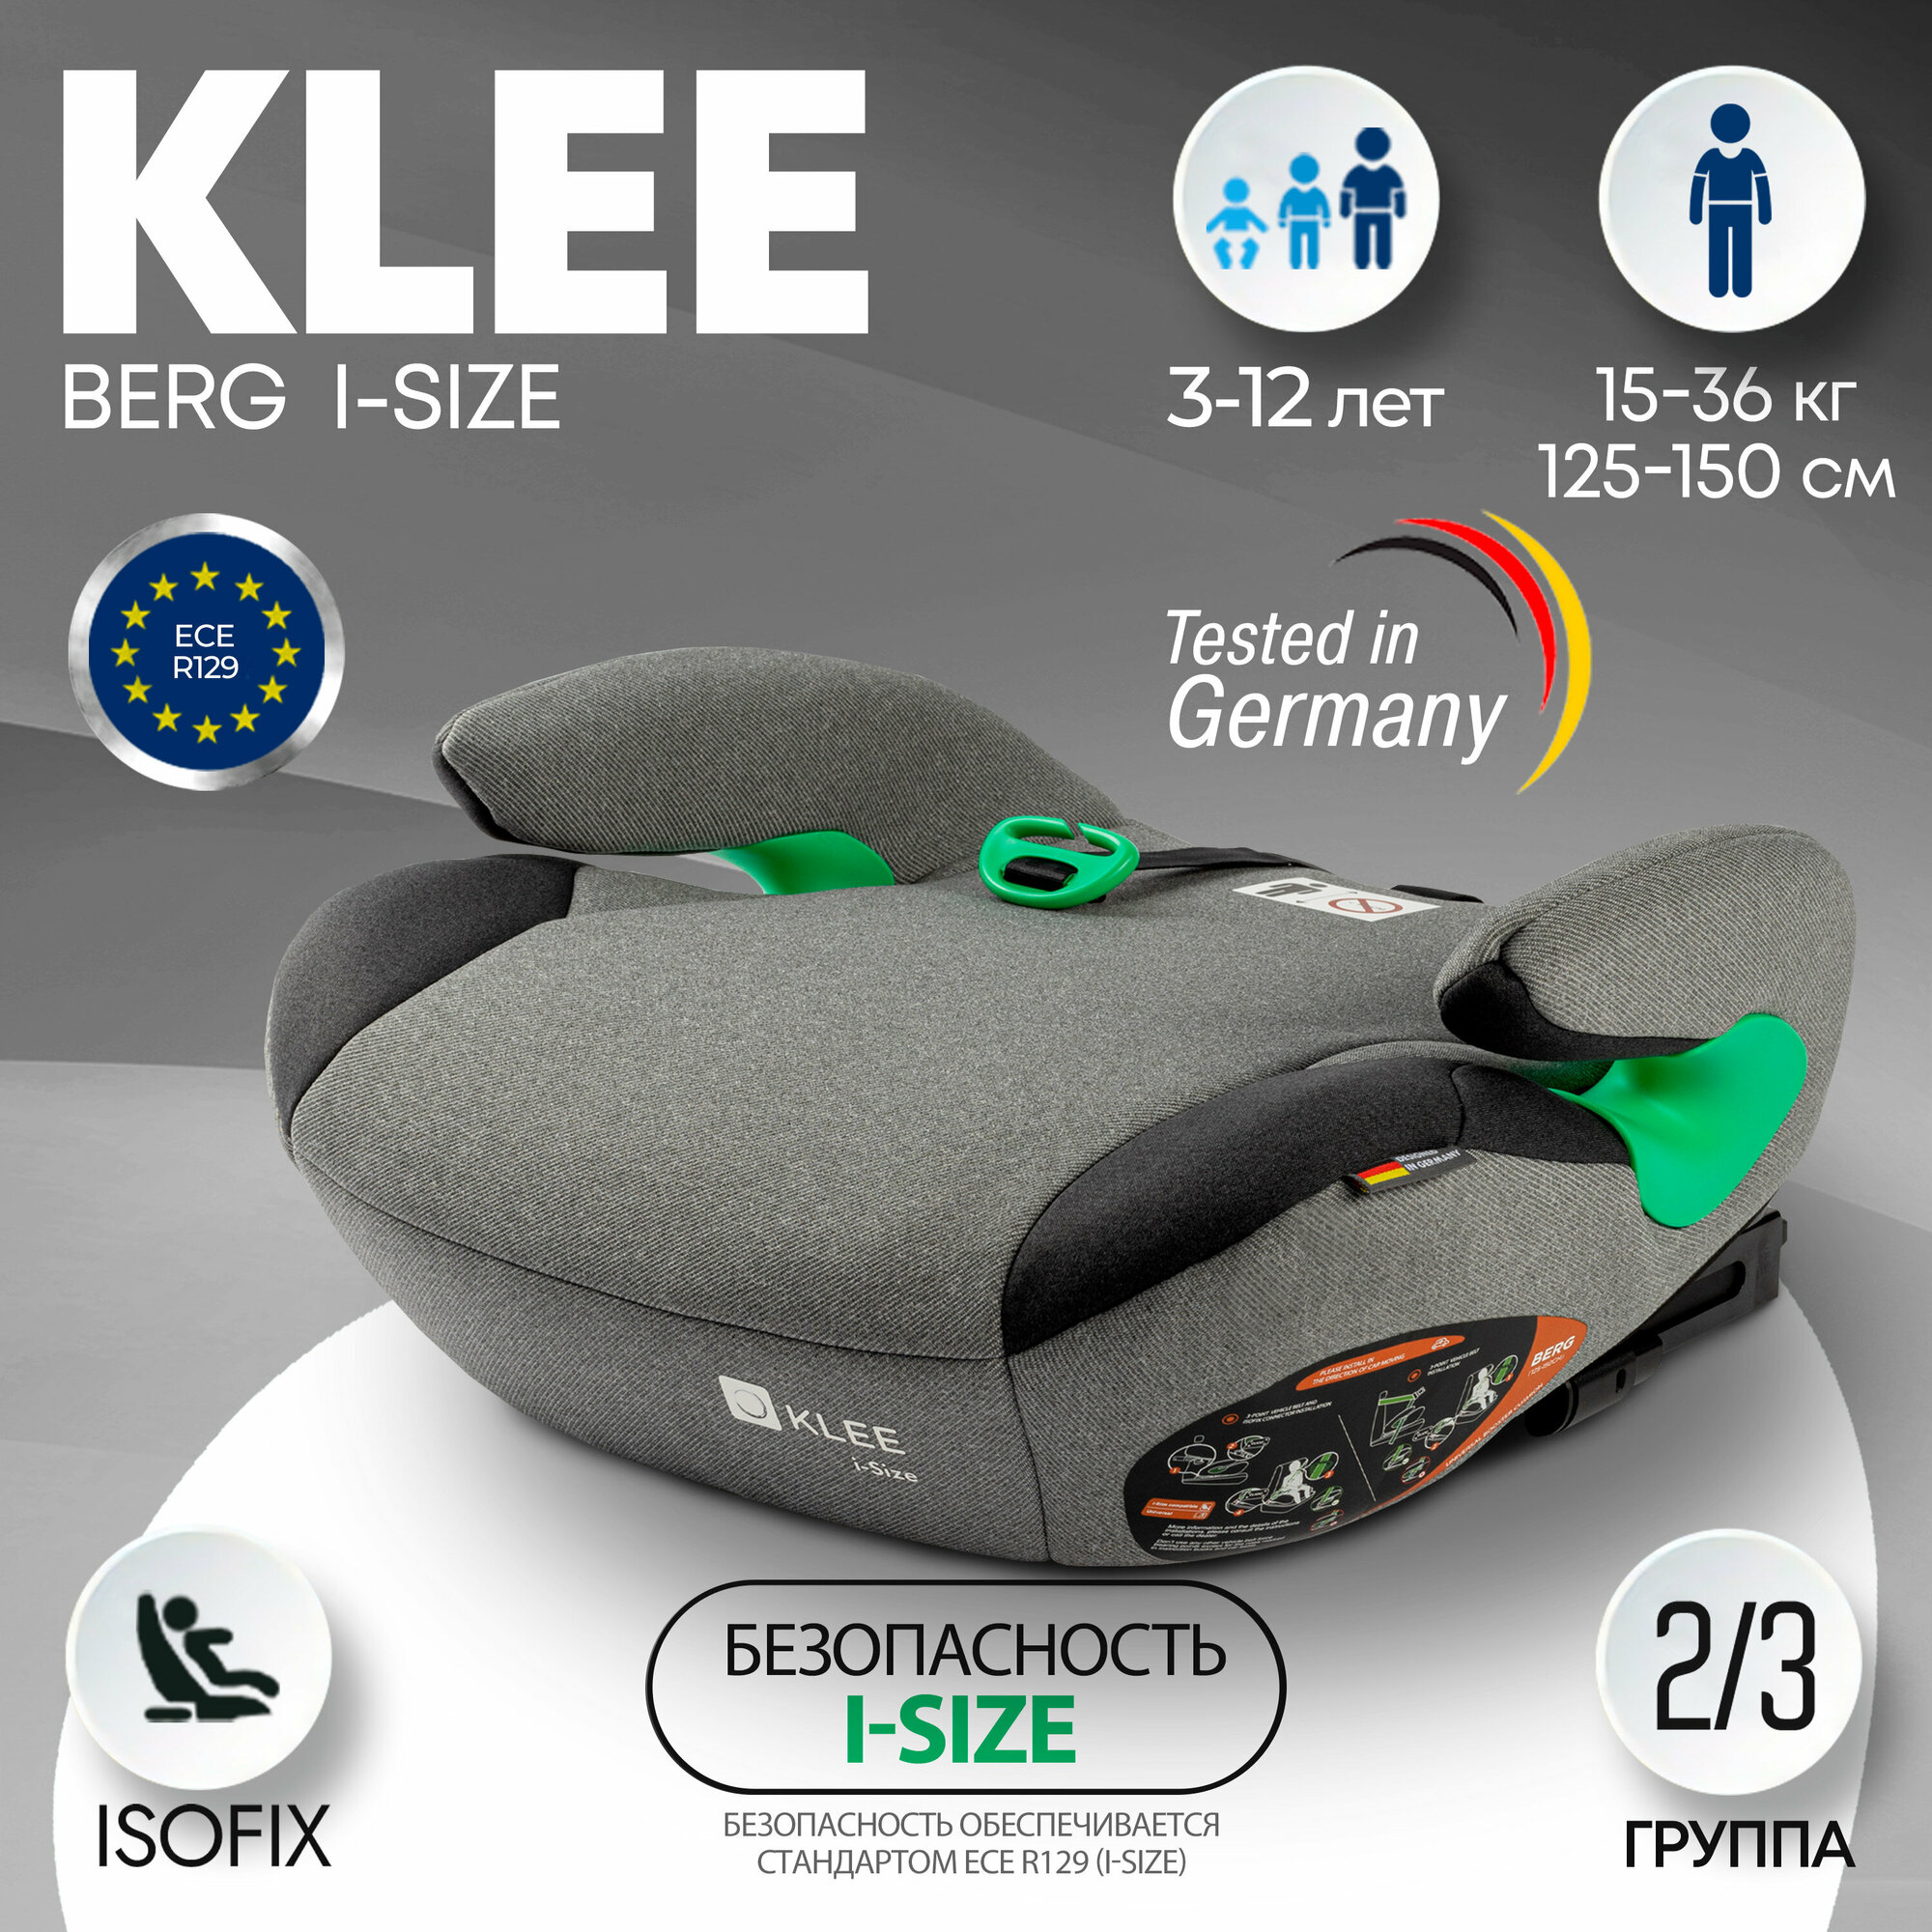 KLEE Berg I-Size